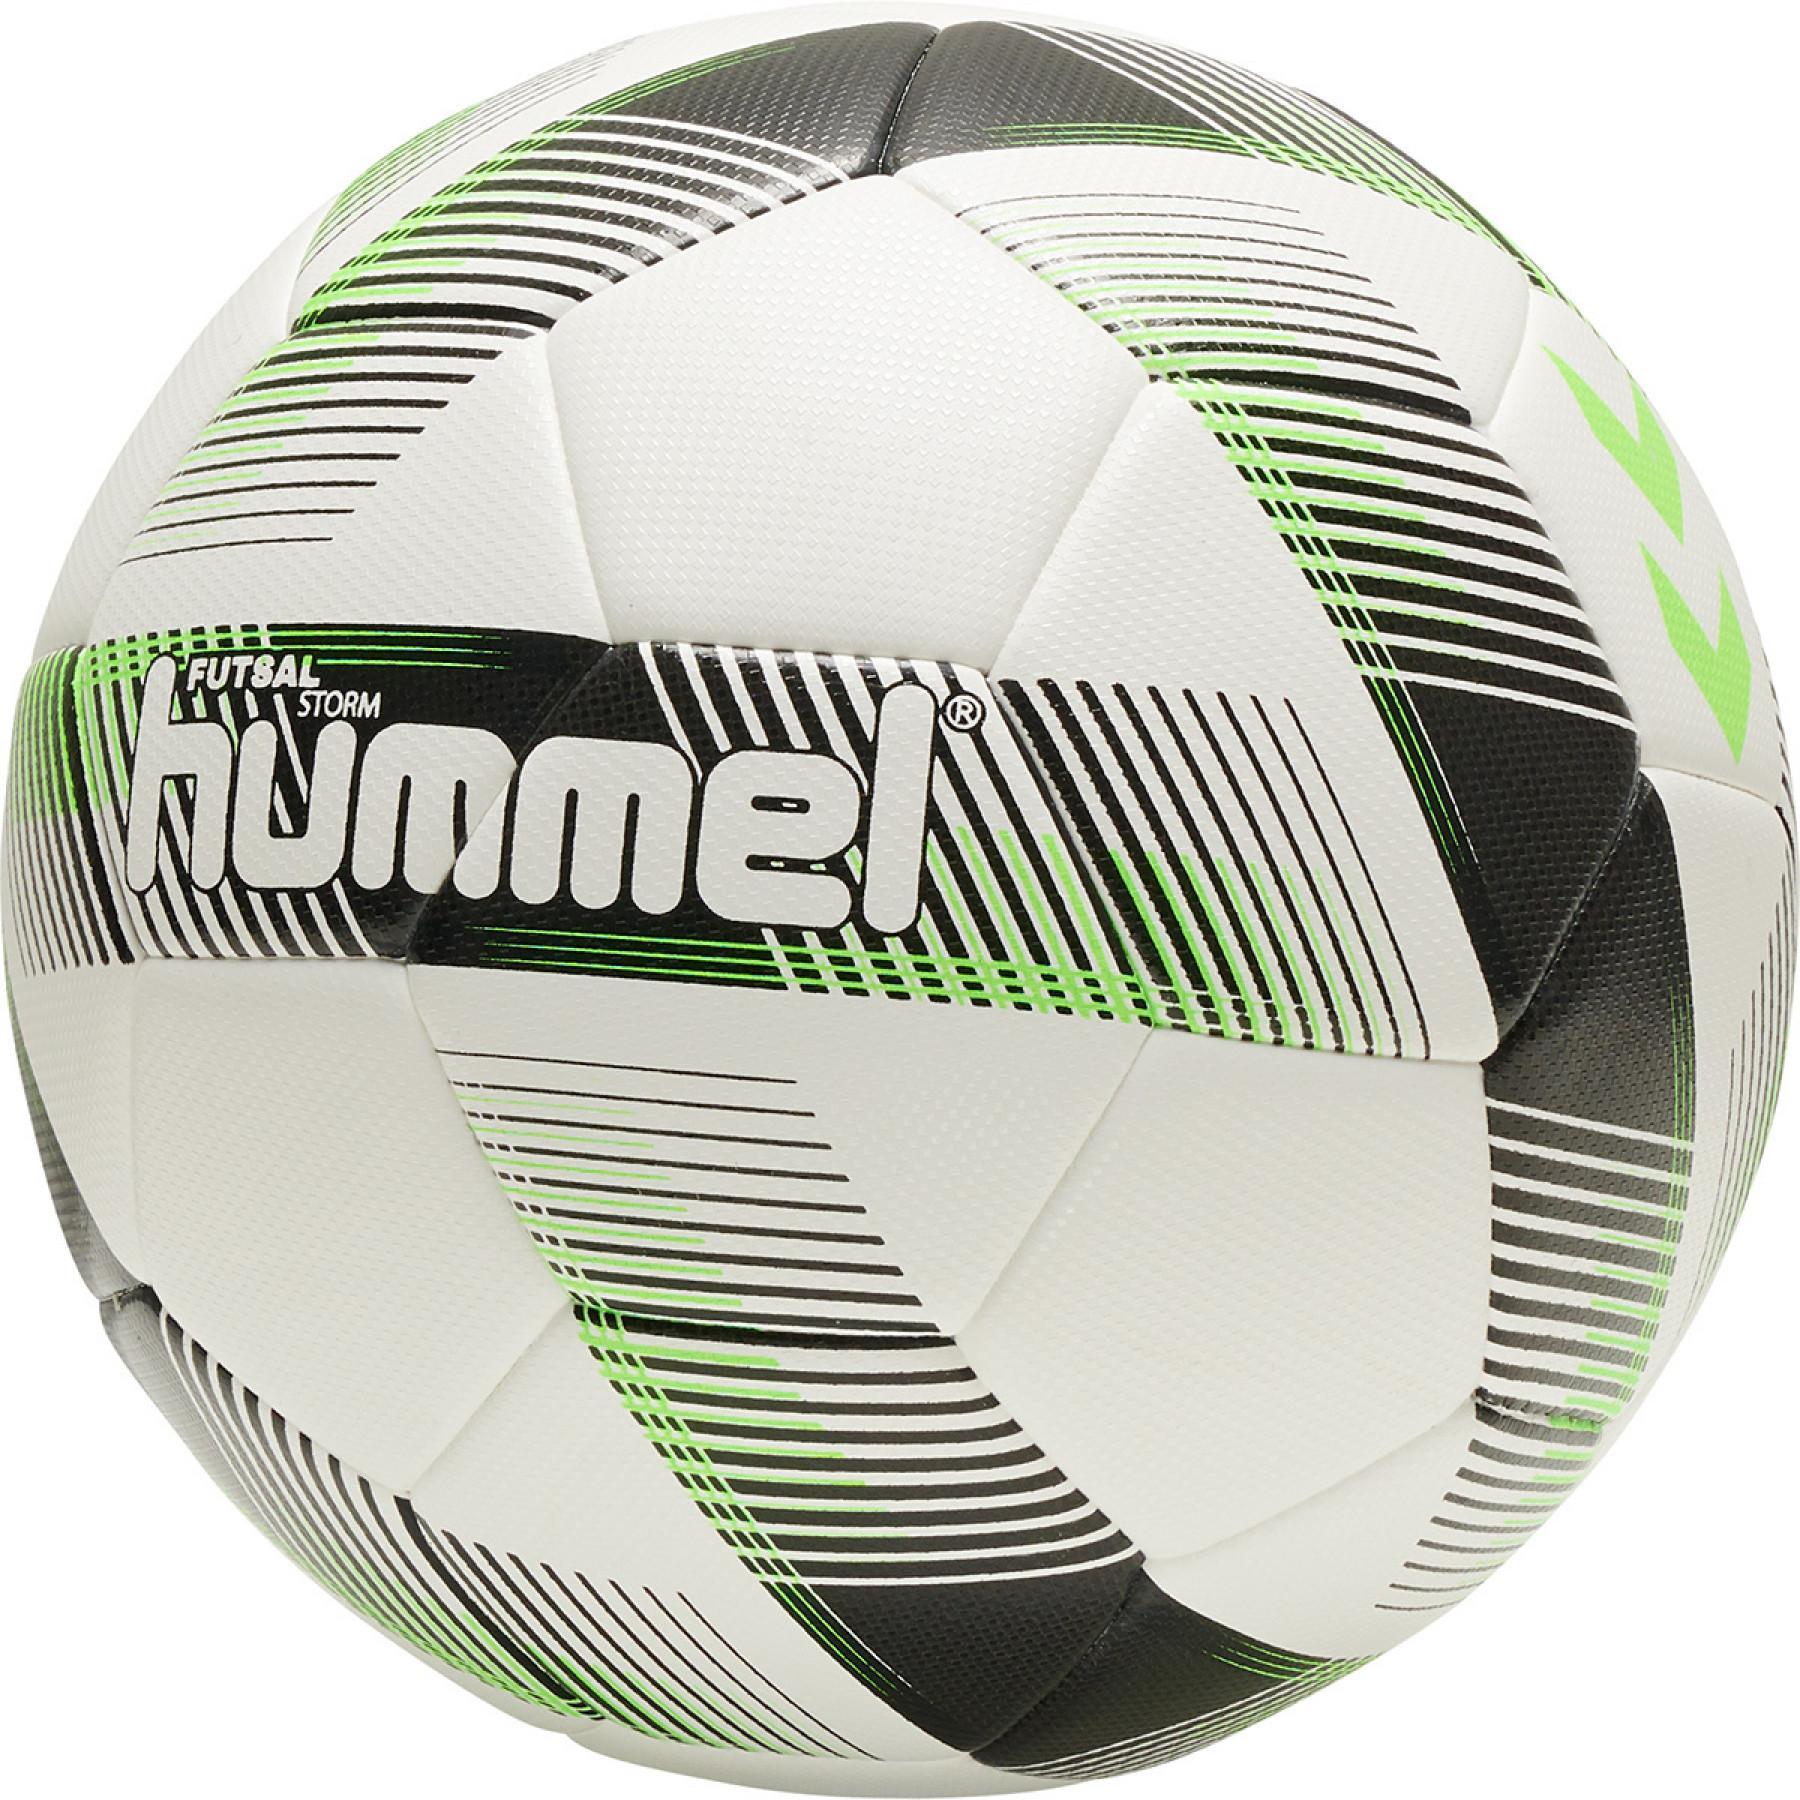 Football Hummel Futsal Storm